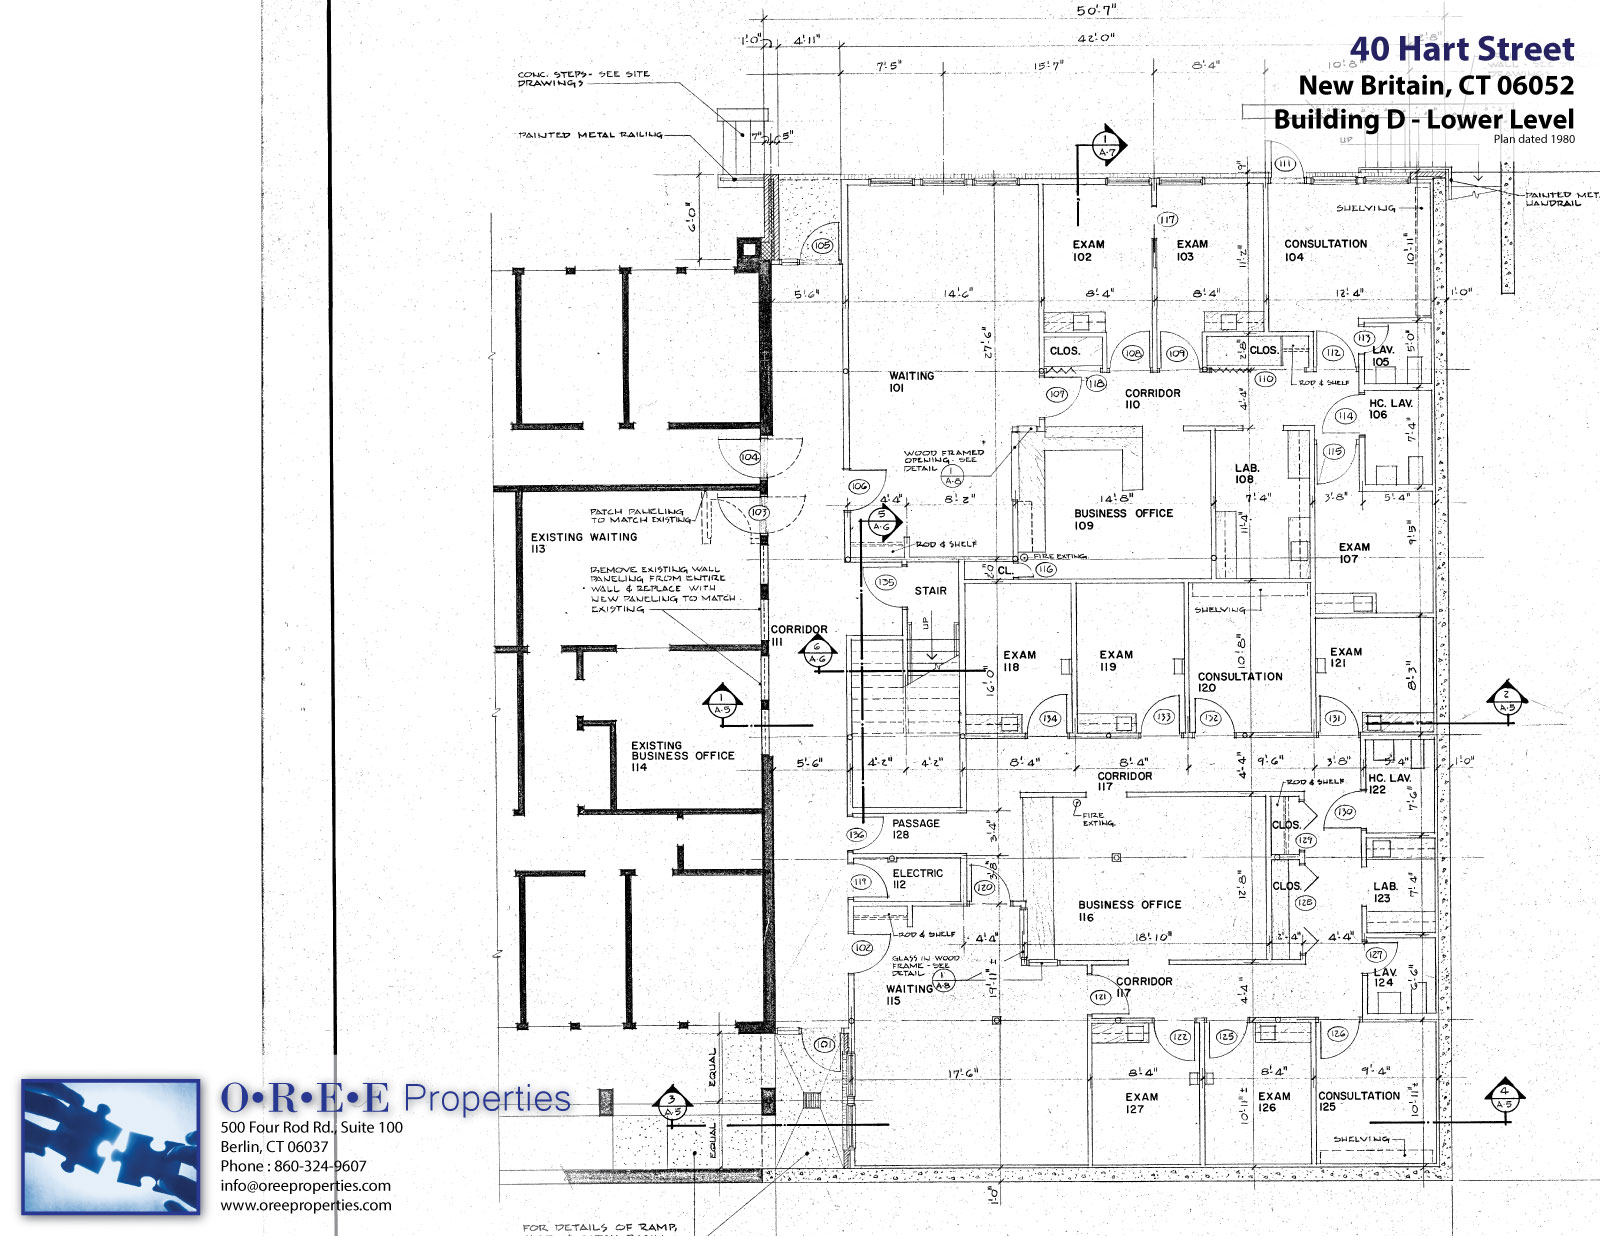 40 Hart St., New Britain, Building D - Lower Level Floor Plan